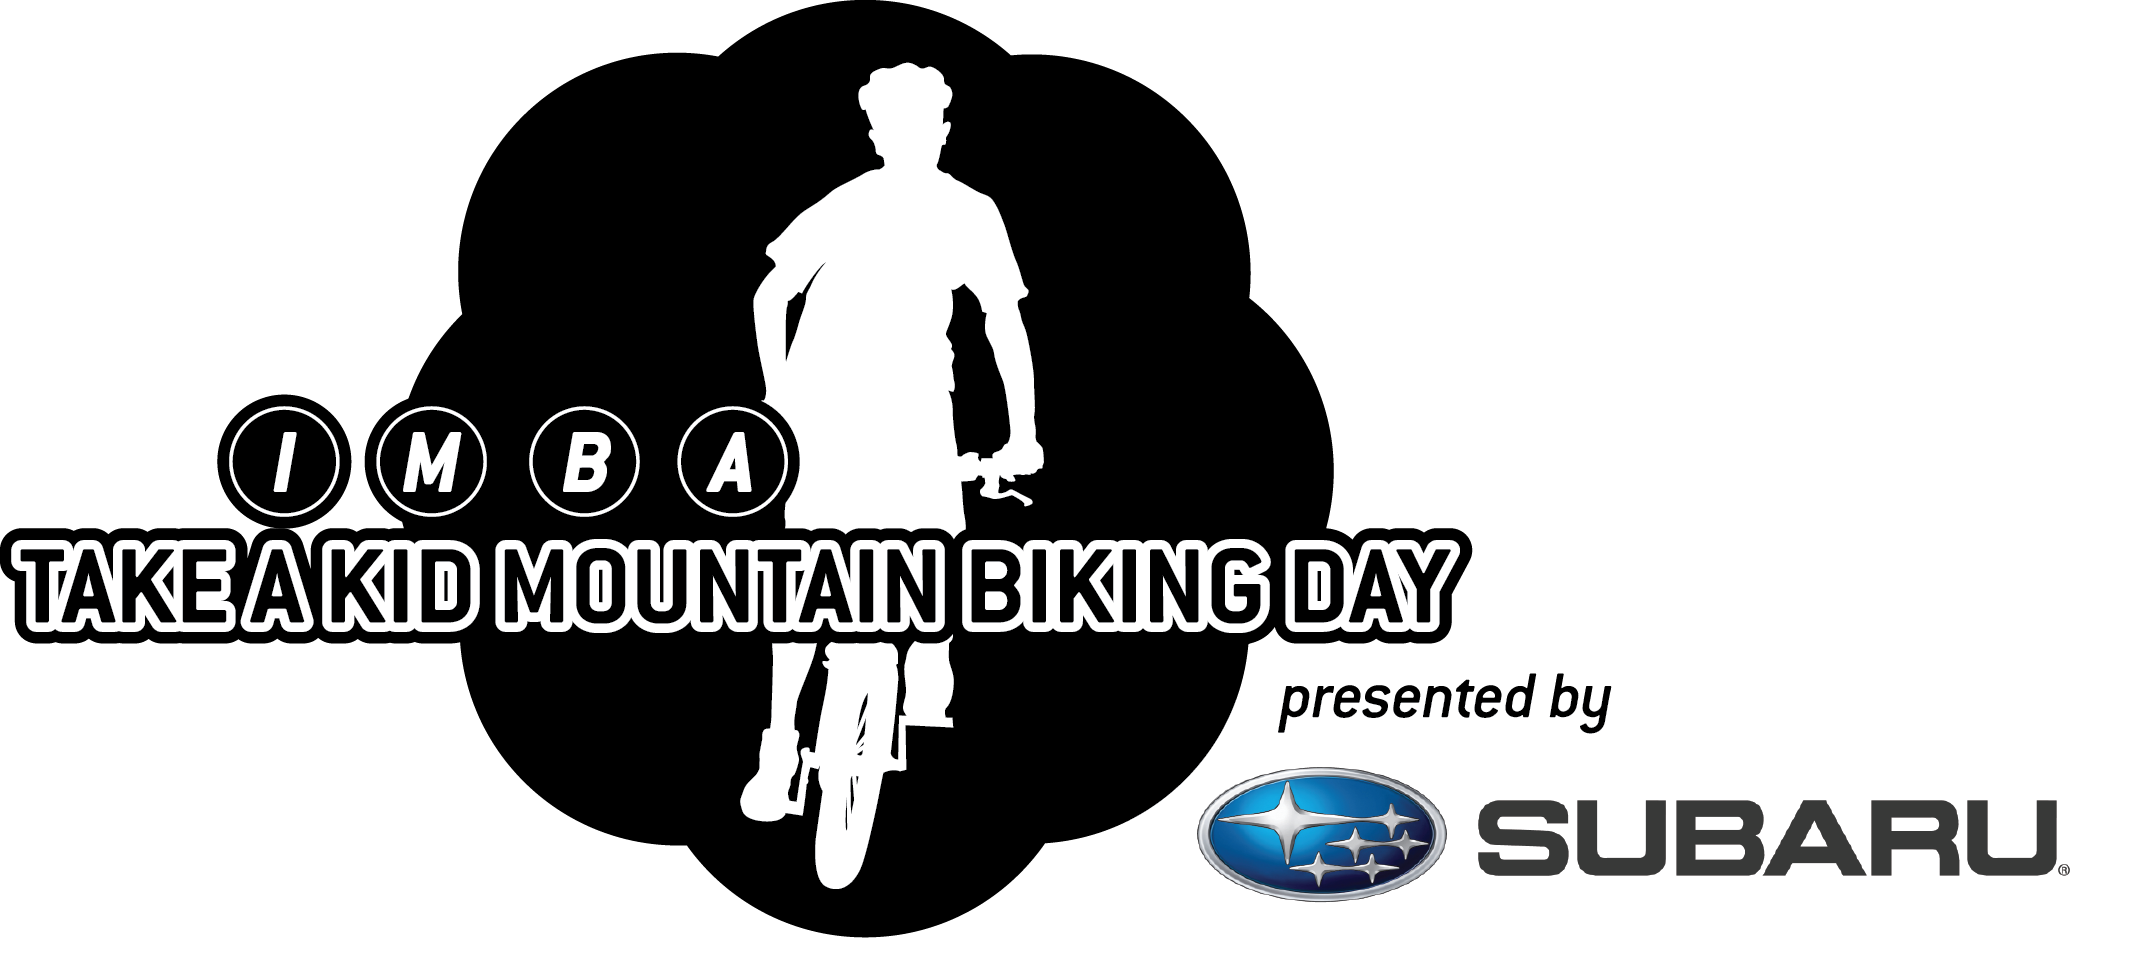 Saturday is IMBA’s Take a Kid Mountain Biking Day